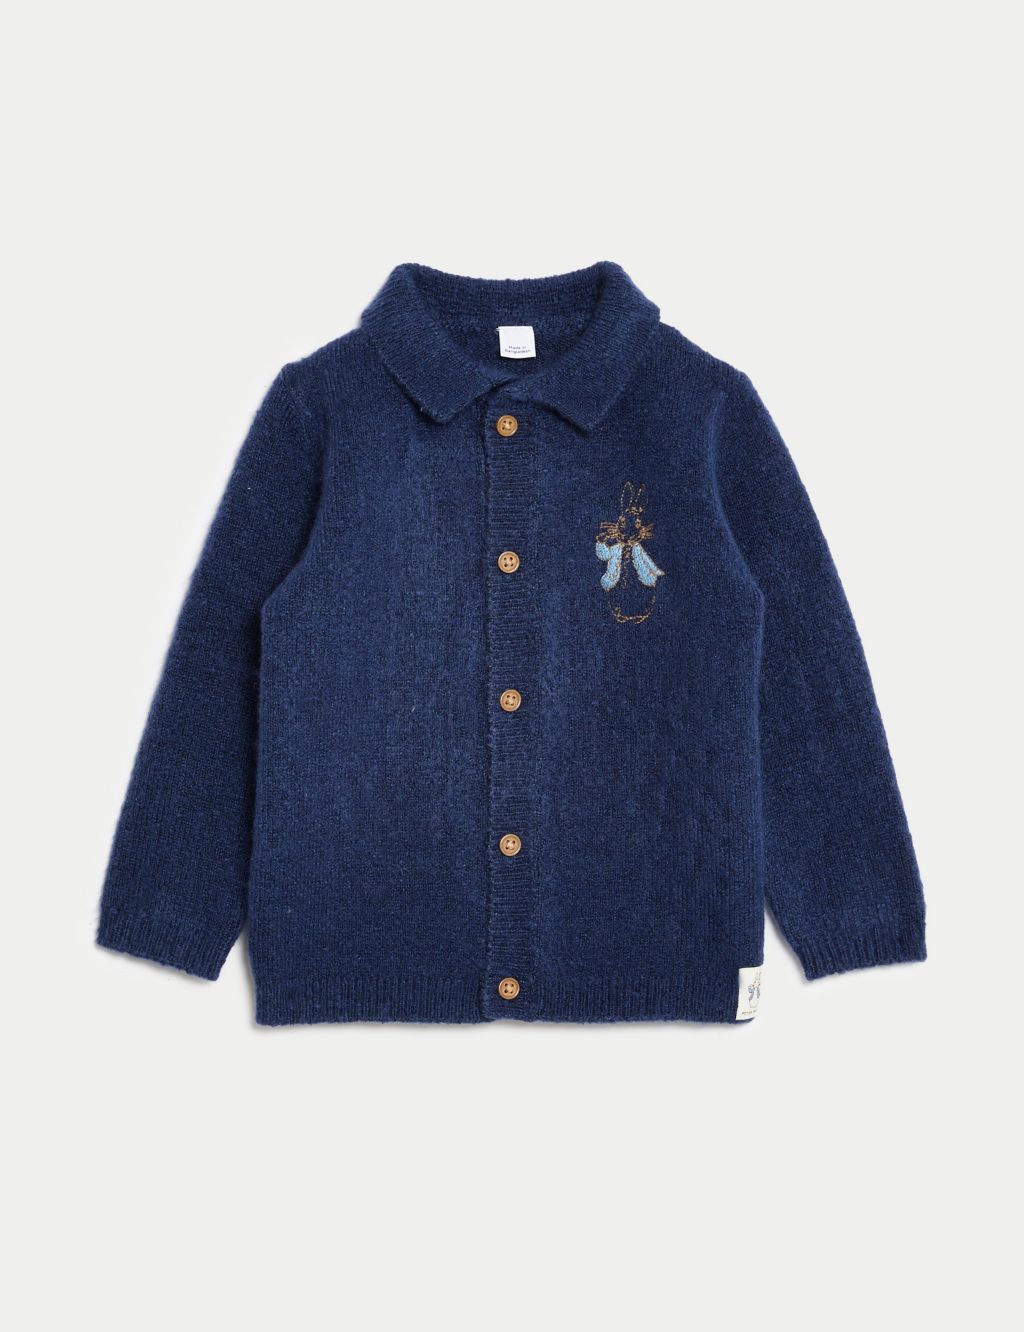 Peter Rabbit™ Knitted Cardigan (0-3 Yrs) image 2